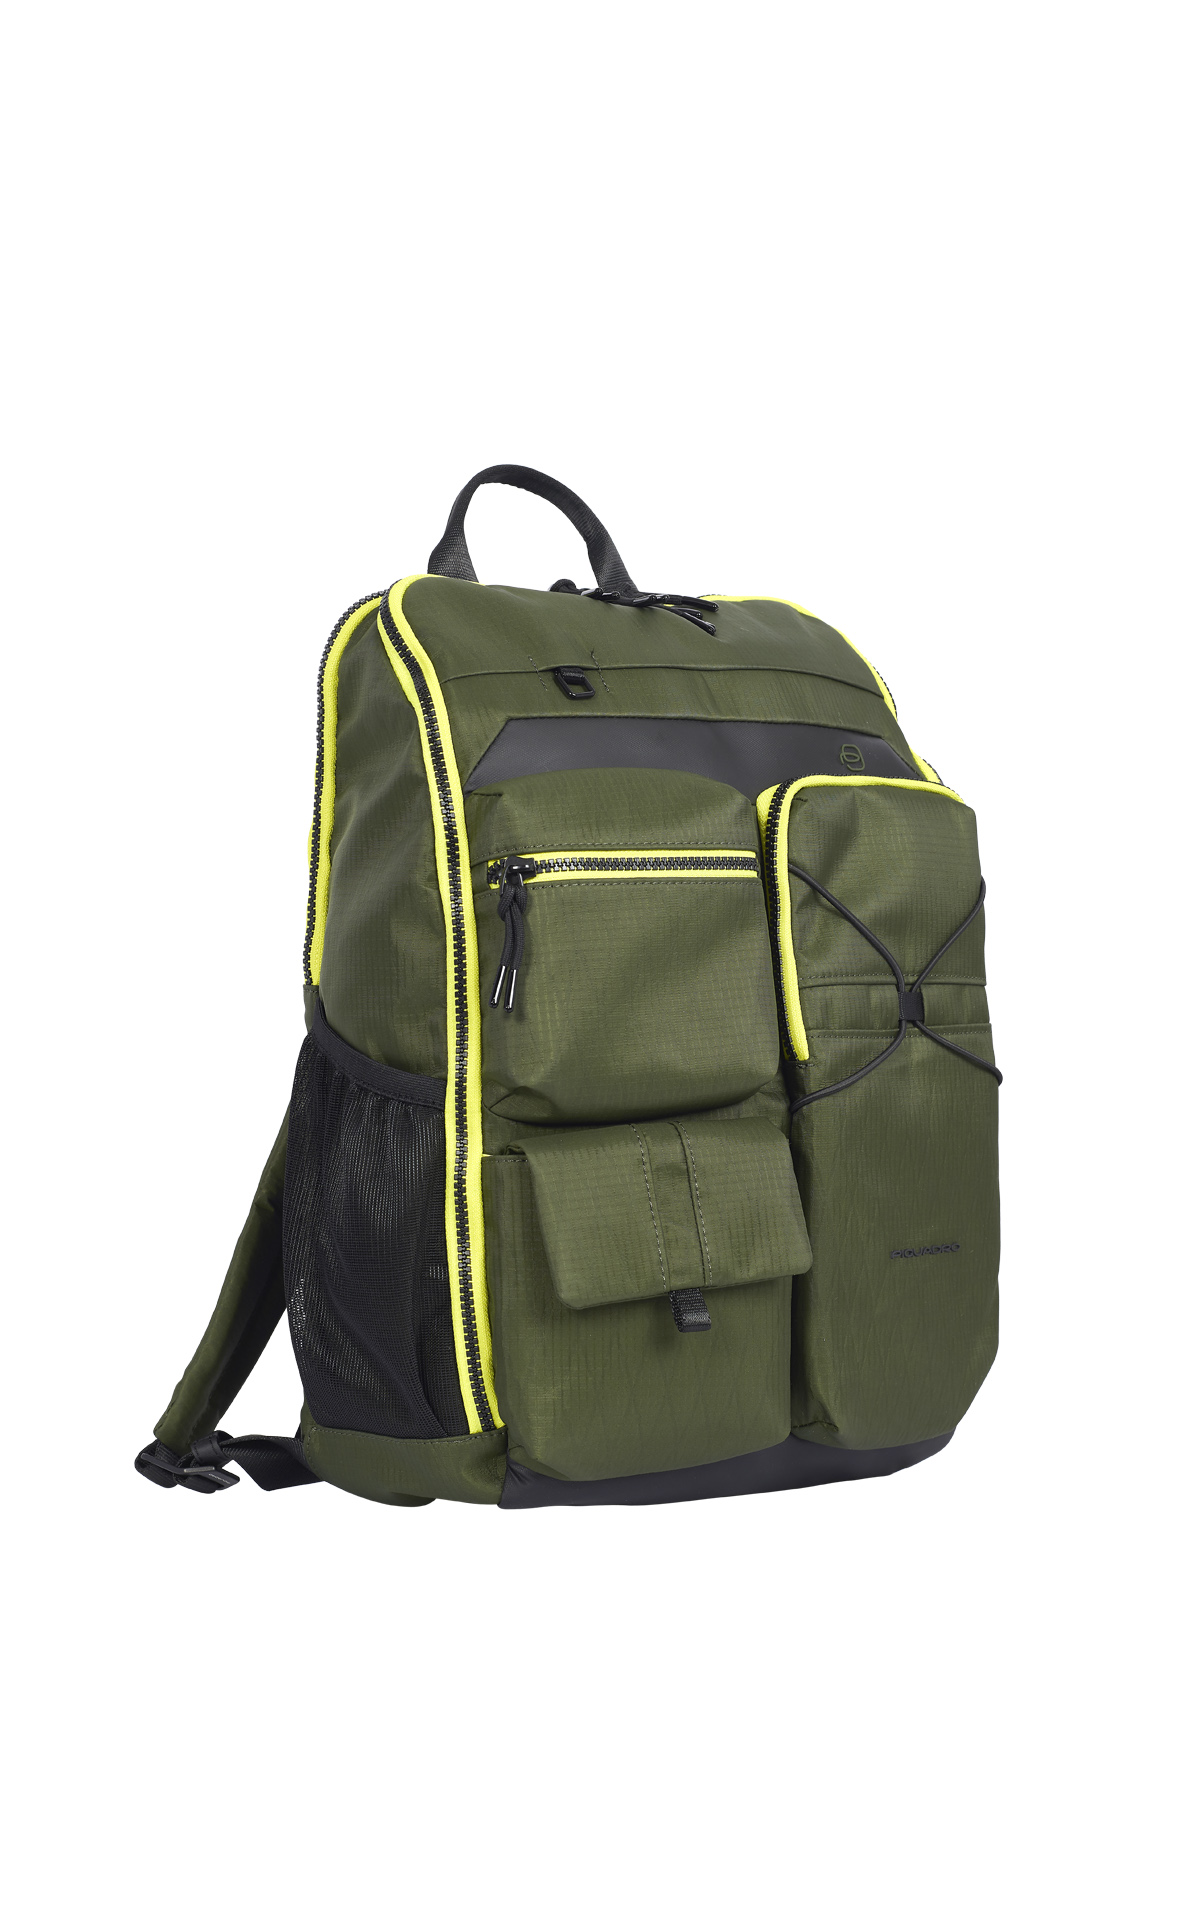 Green backpack Piquadro